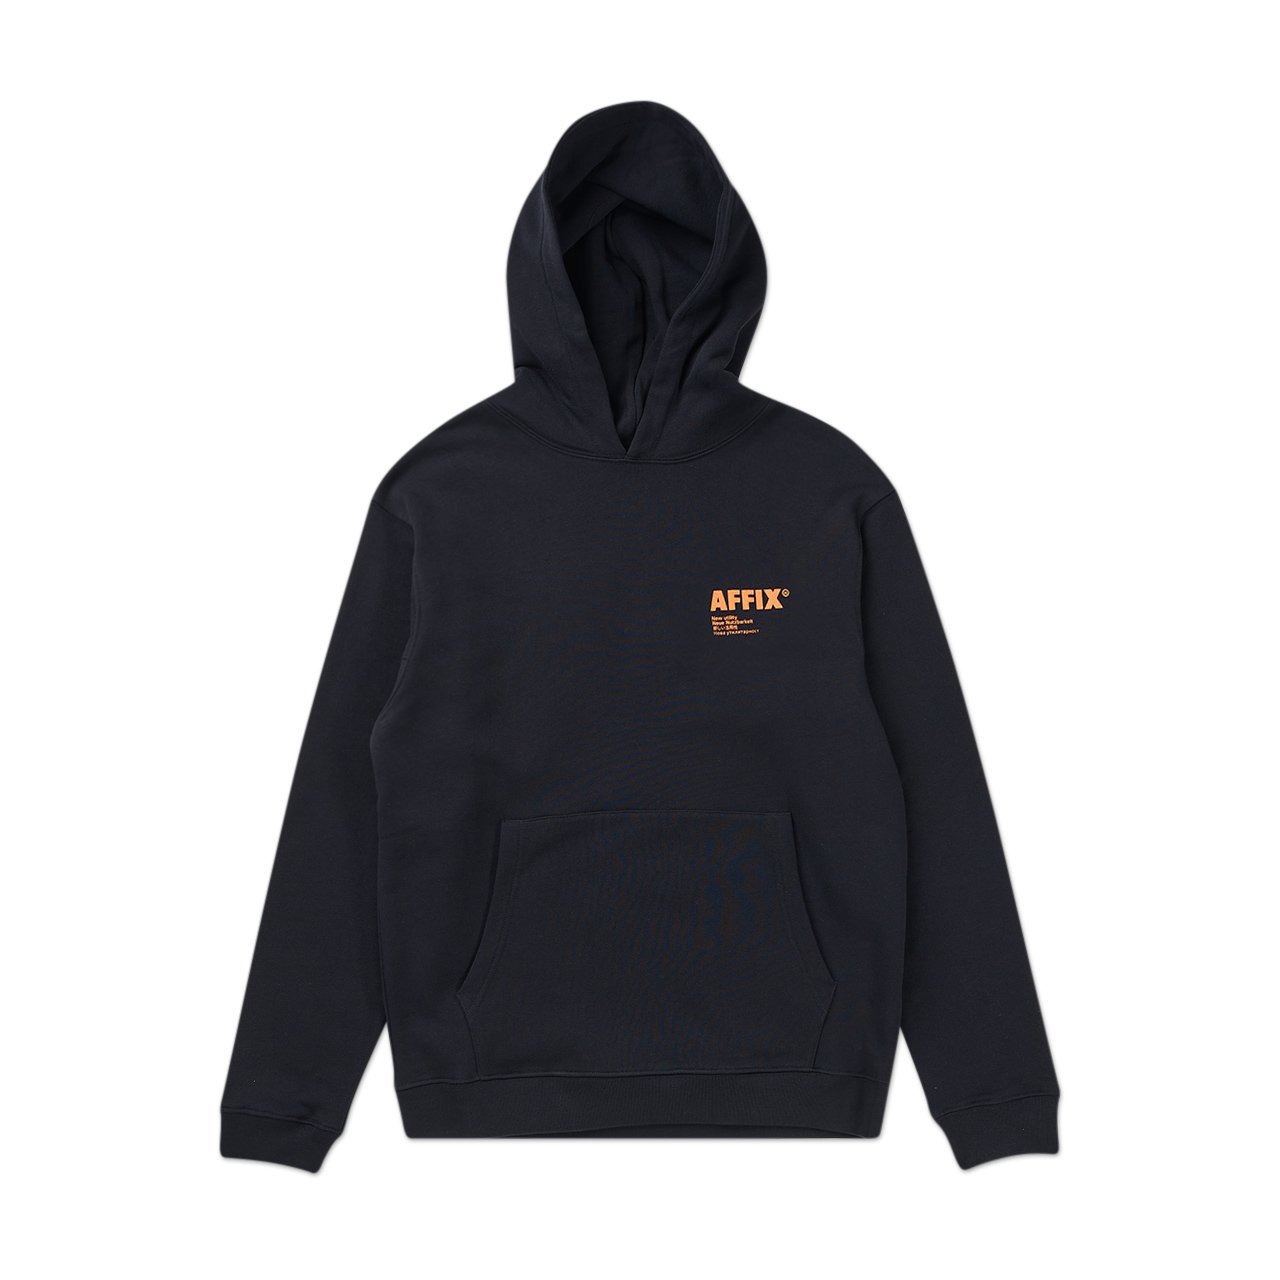 affix works standardised logo hoodie (black / orange)